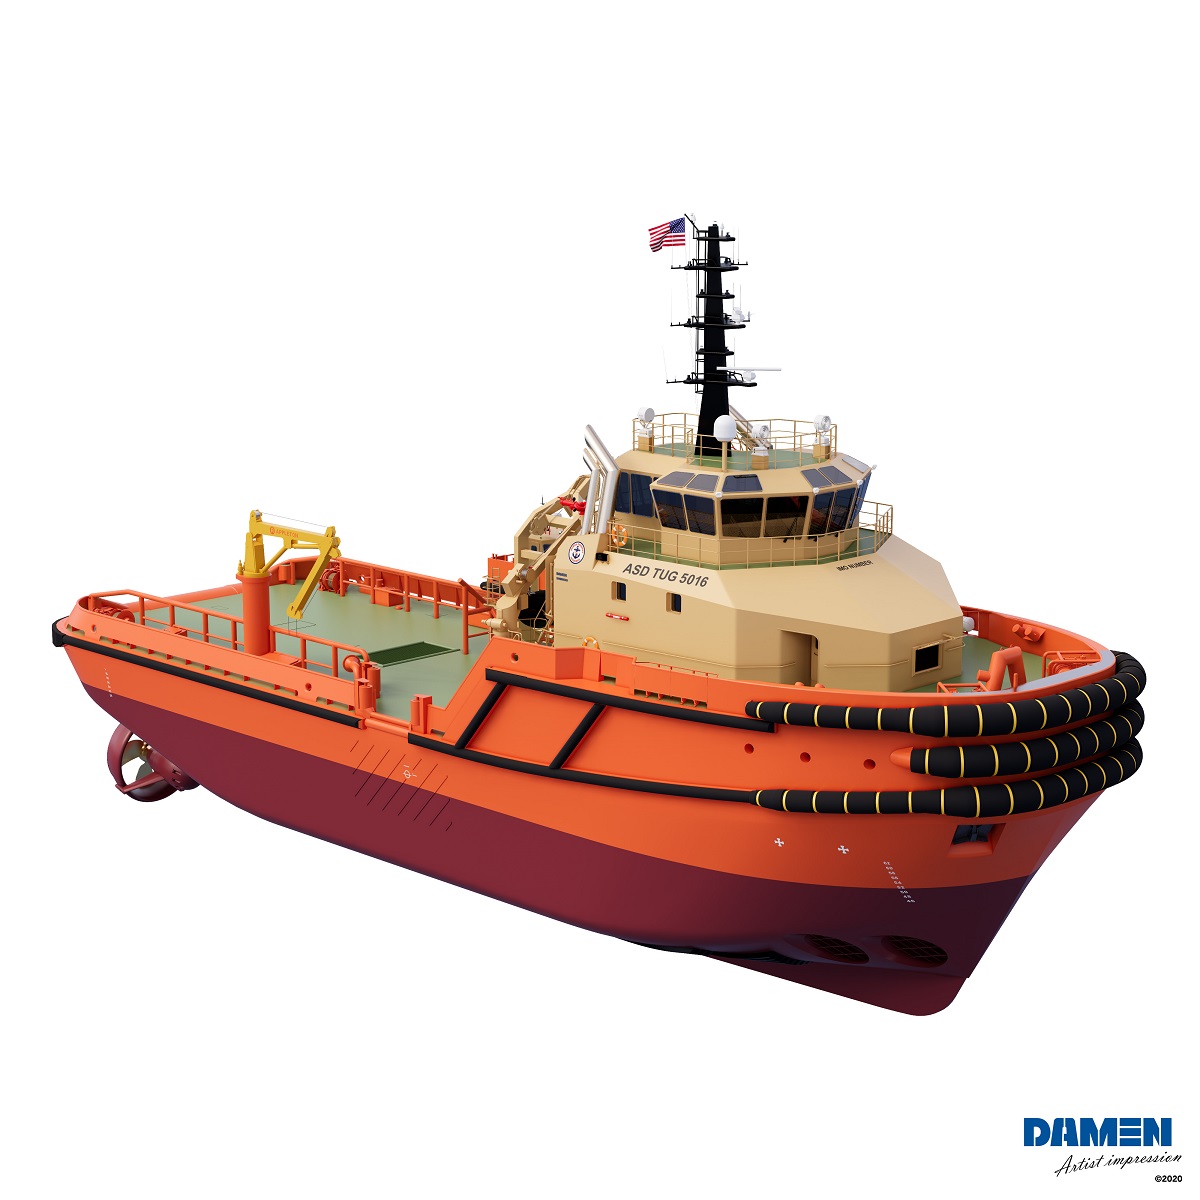 Damen to supply ASD Tug 5016 design to Edison Chouest Offshore